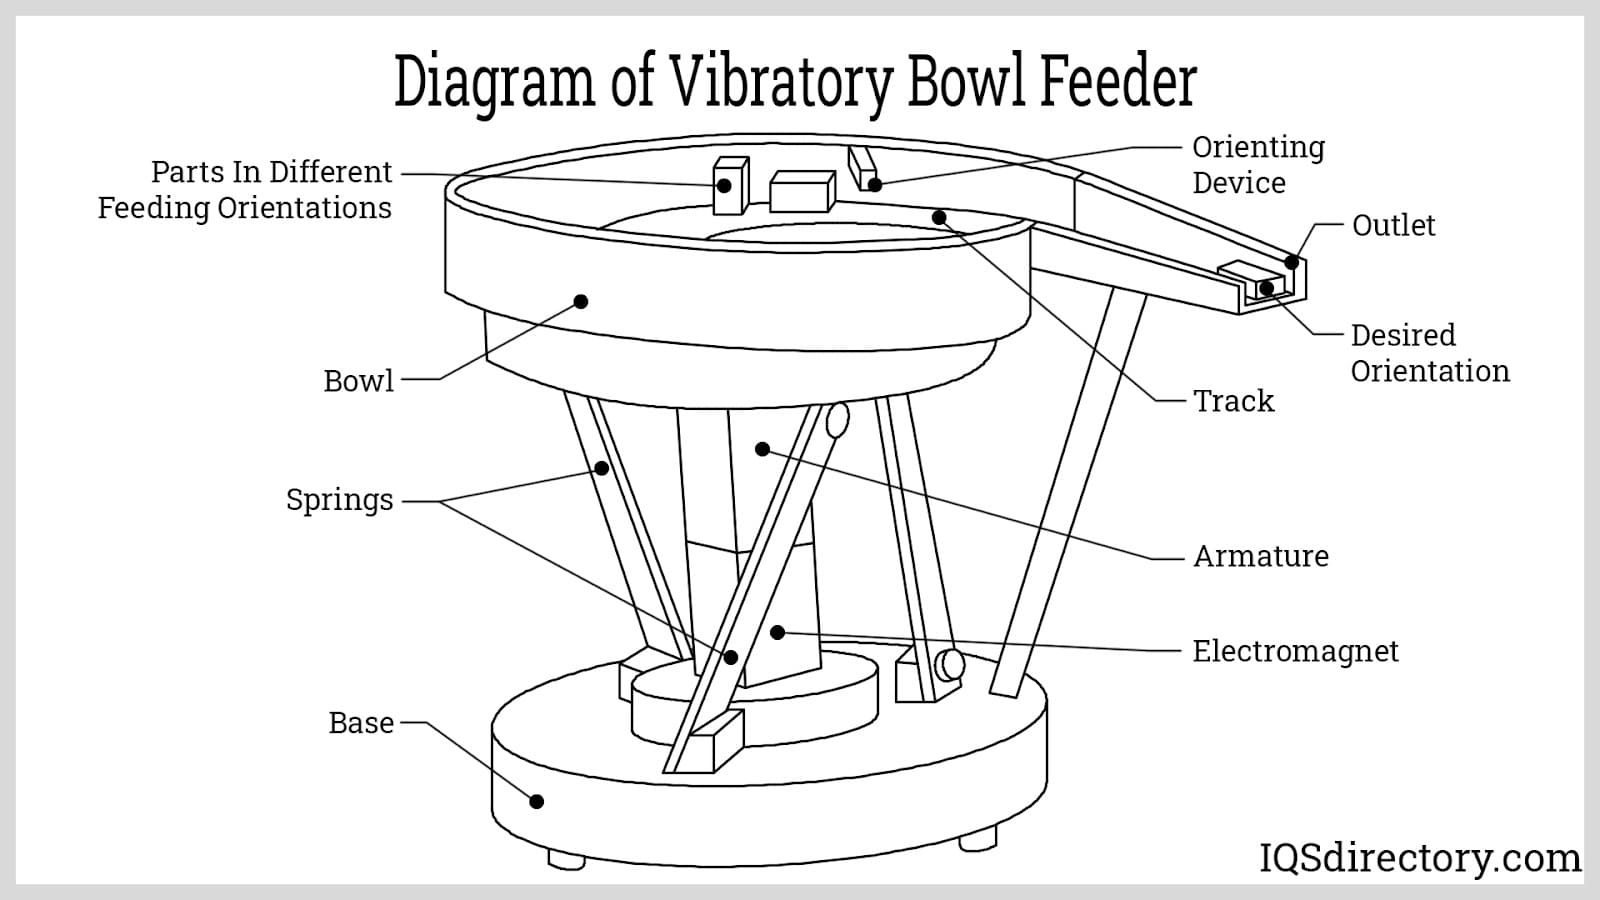 Diagram of Vibratory Bowl Feeder